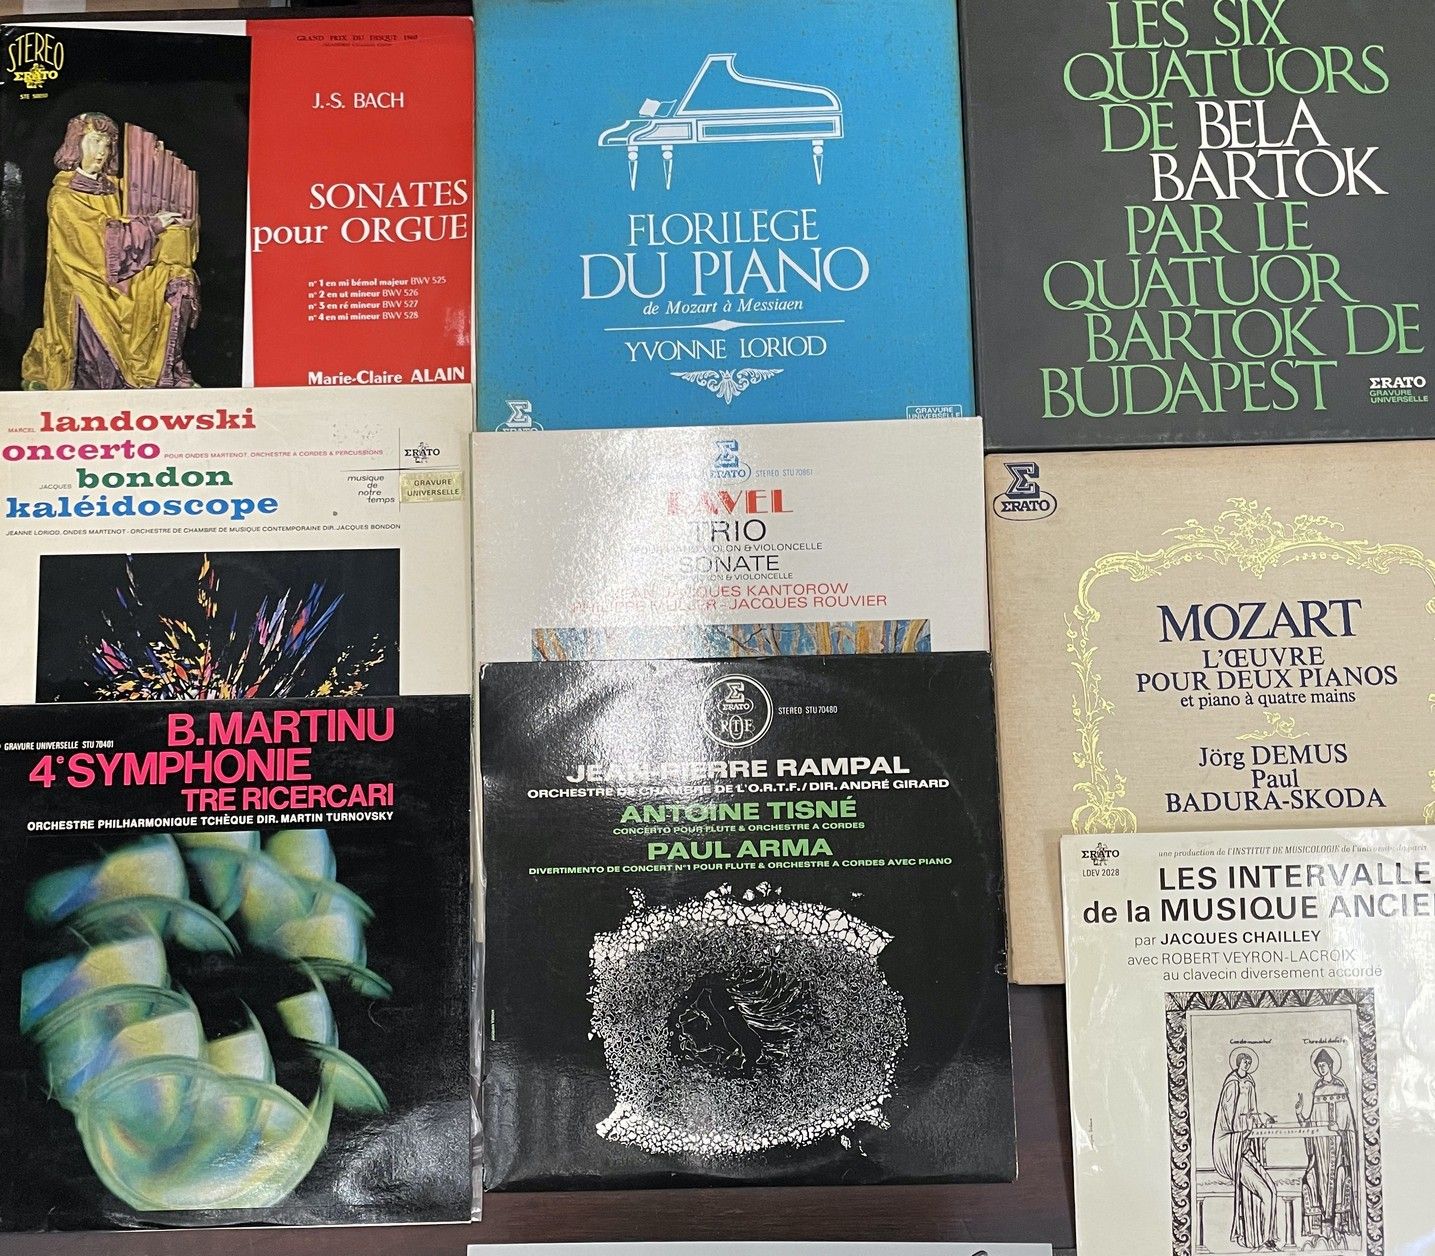 Label ERATO Nueve discos/sets de 25 cm/33T (33T) - Música clásica, Sello Erato

&hellip;